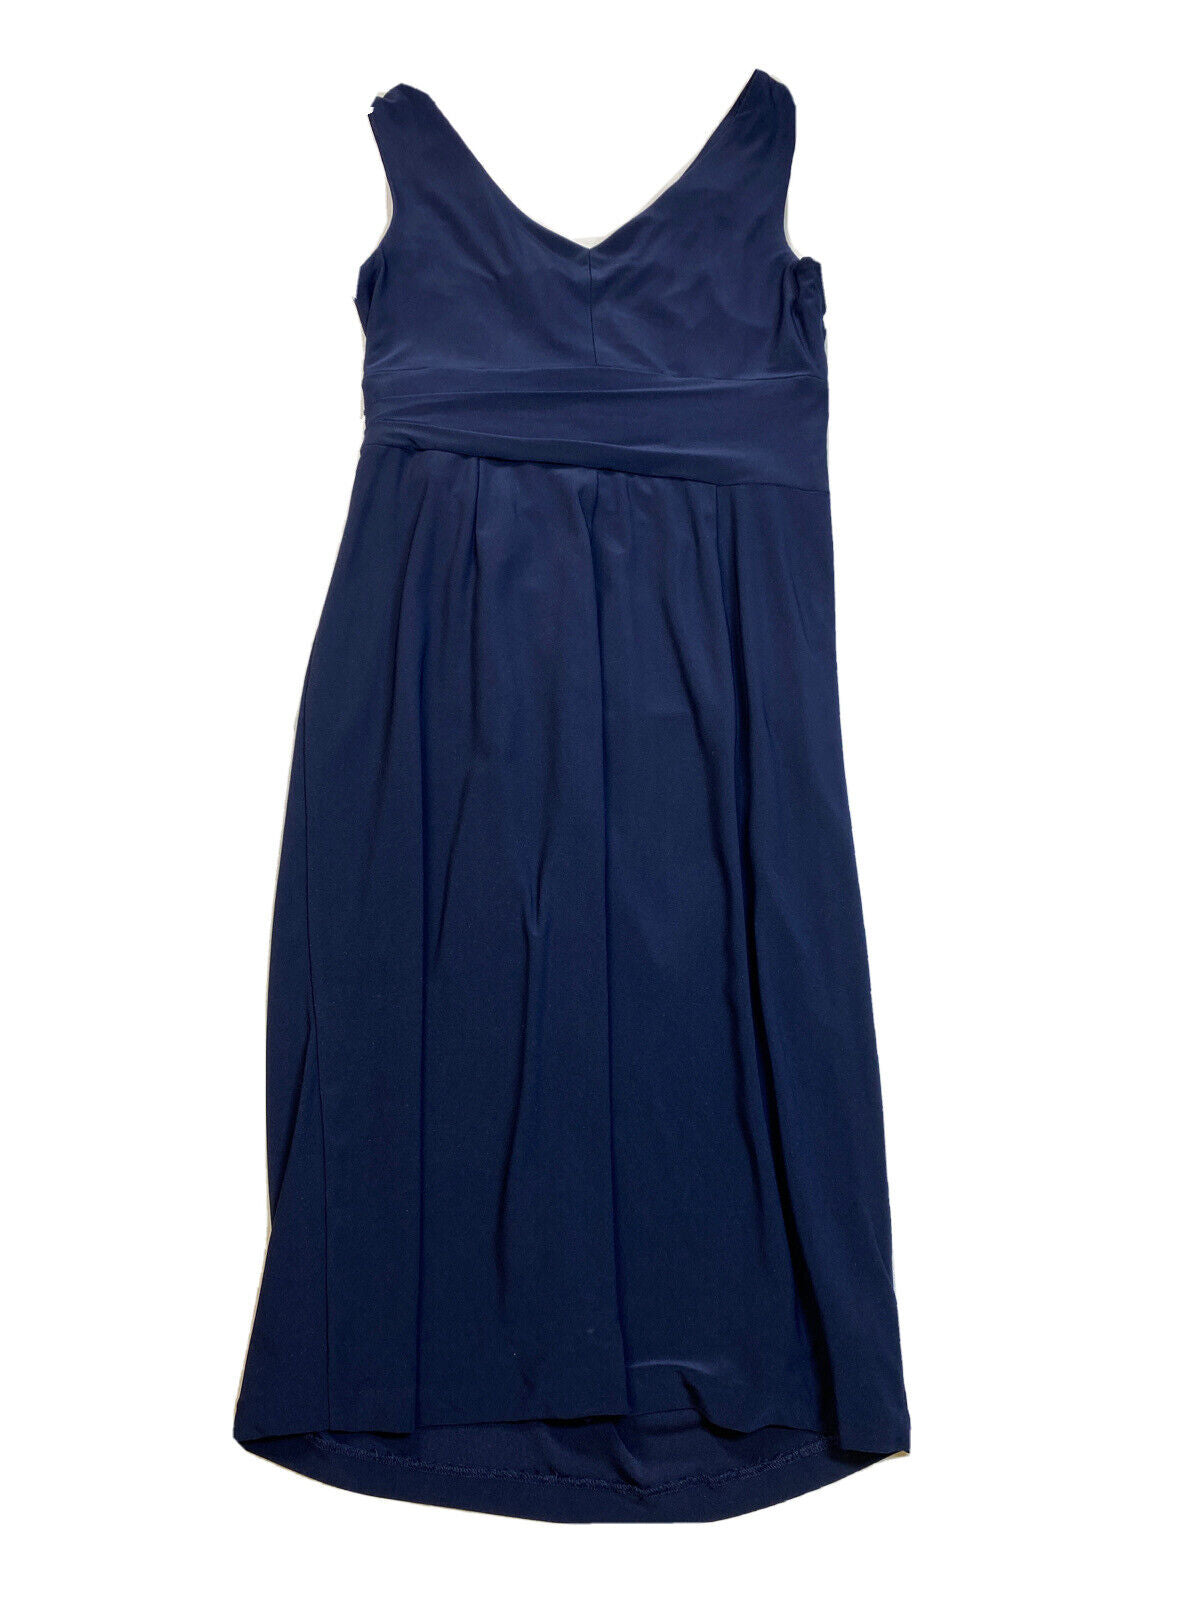 Anne Klein Women's Navy Blue Beaded Sleeveless Sheath Dress - 6